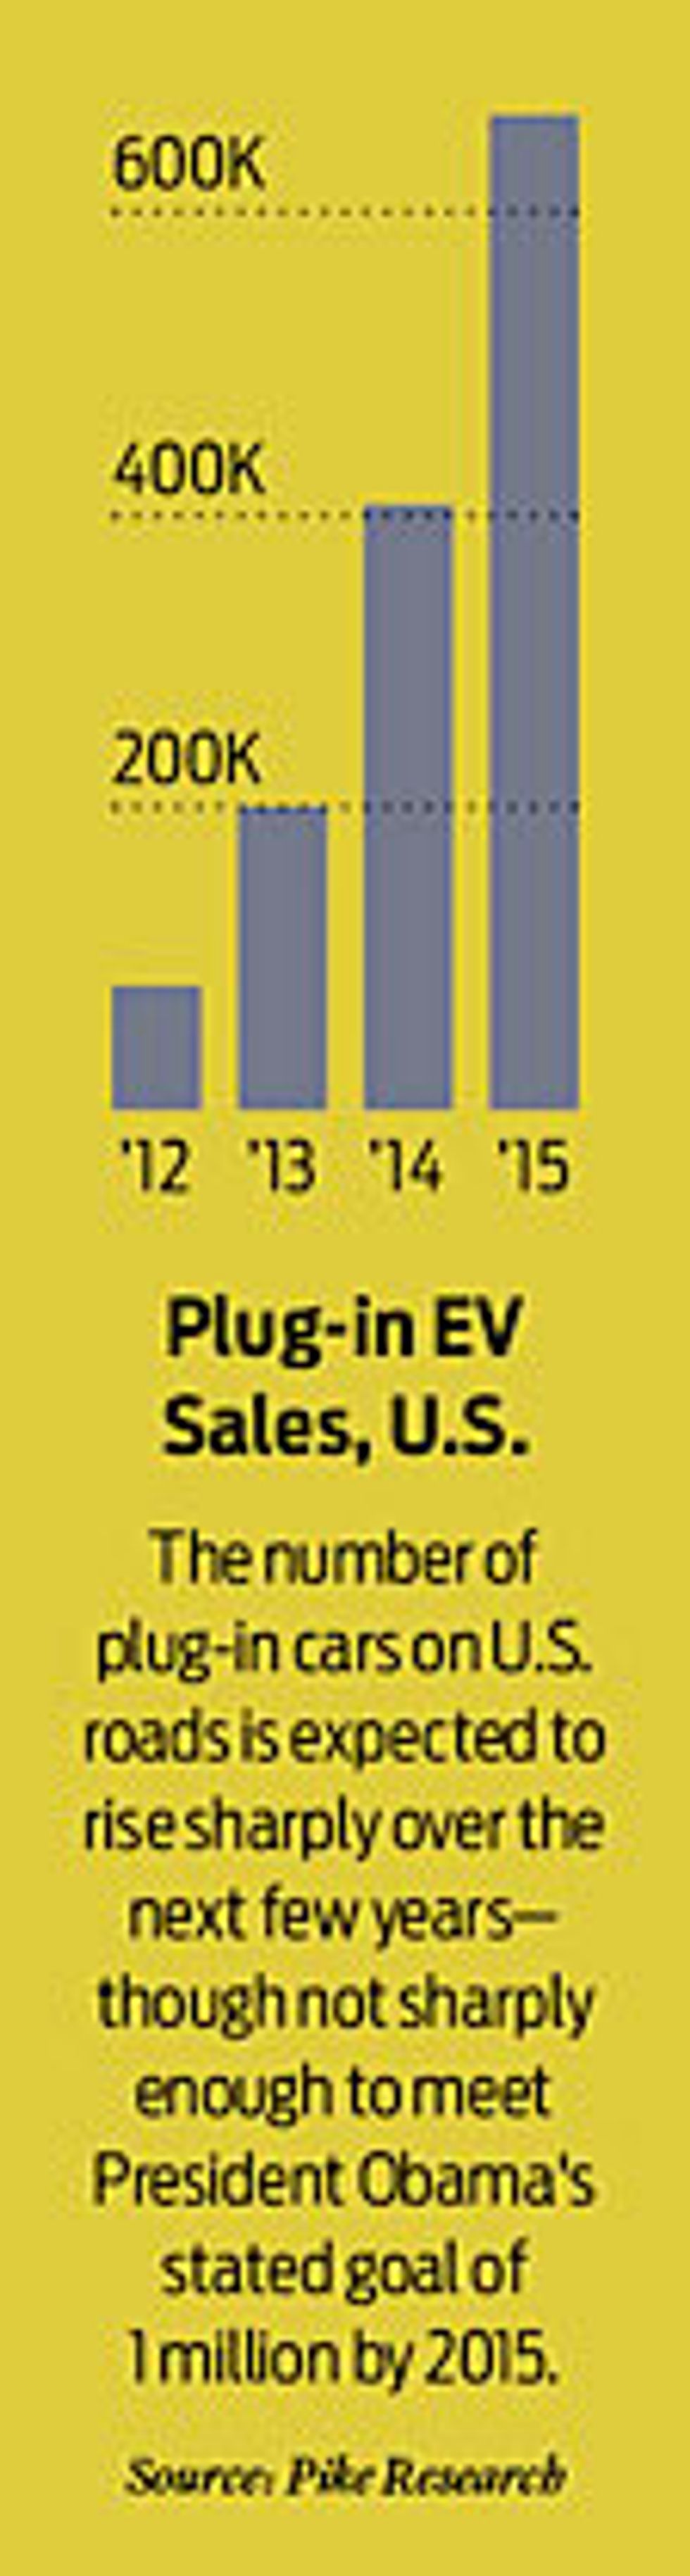 chart showing plug-in EV sales, U.S.